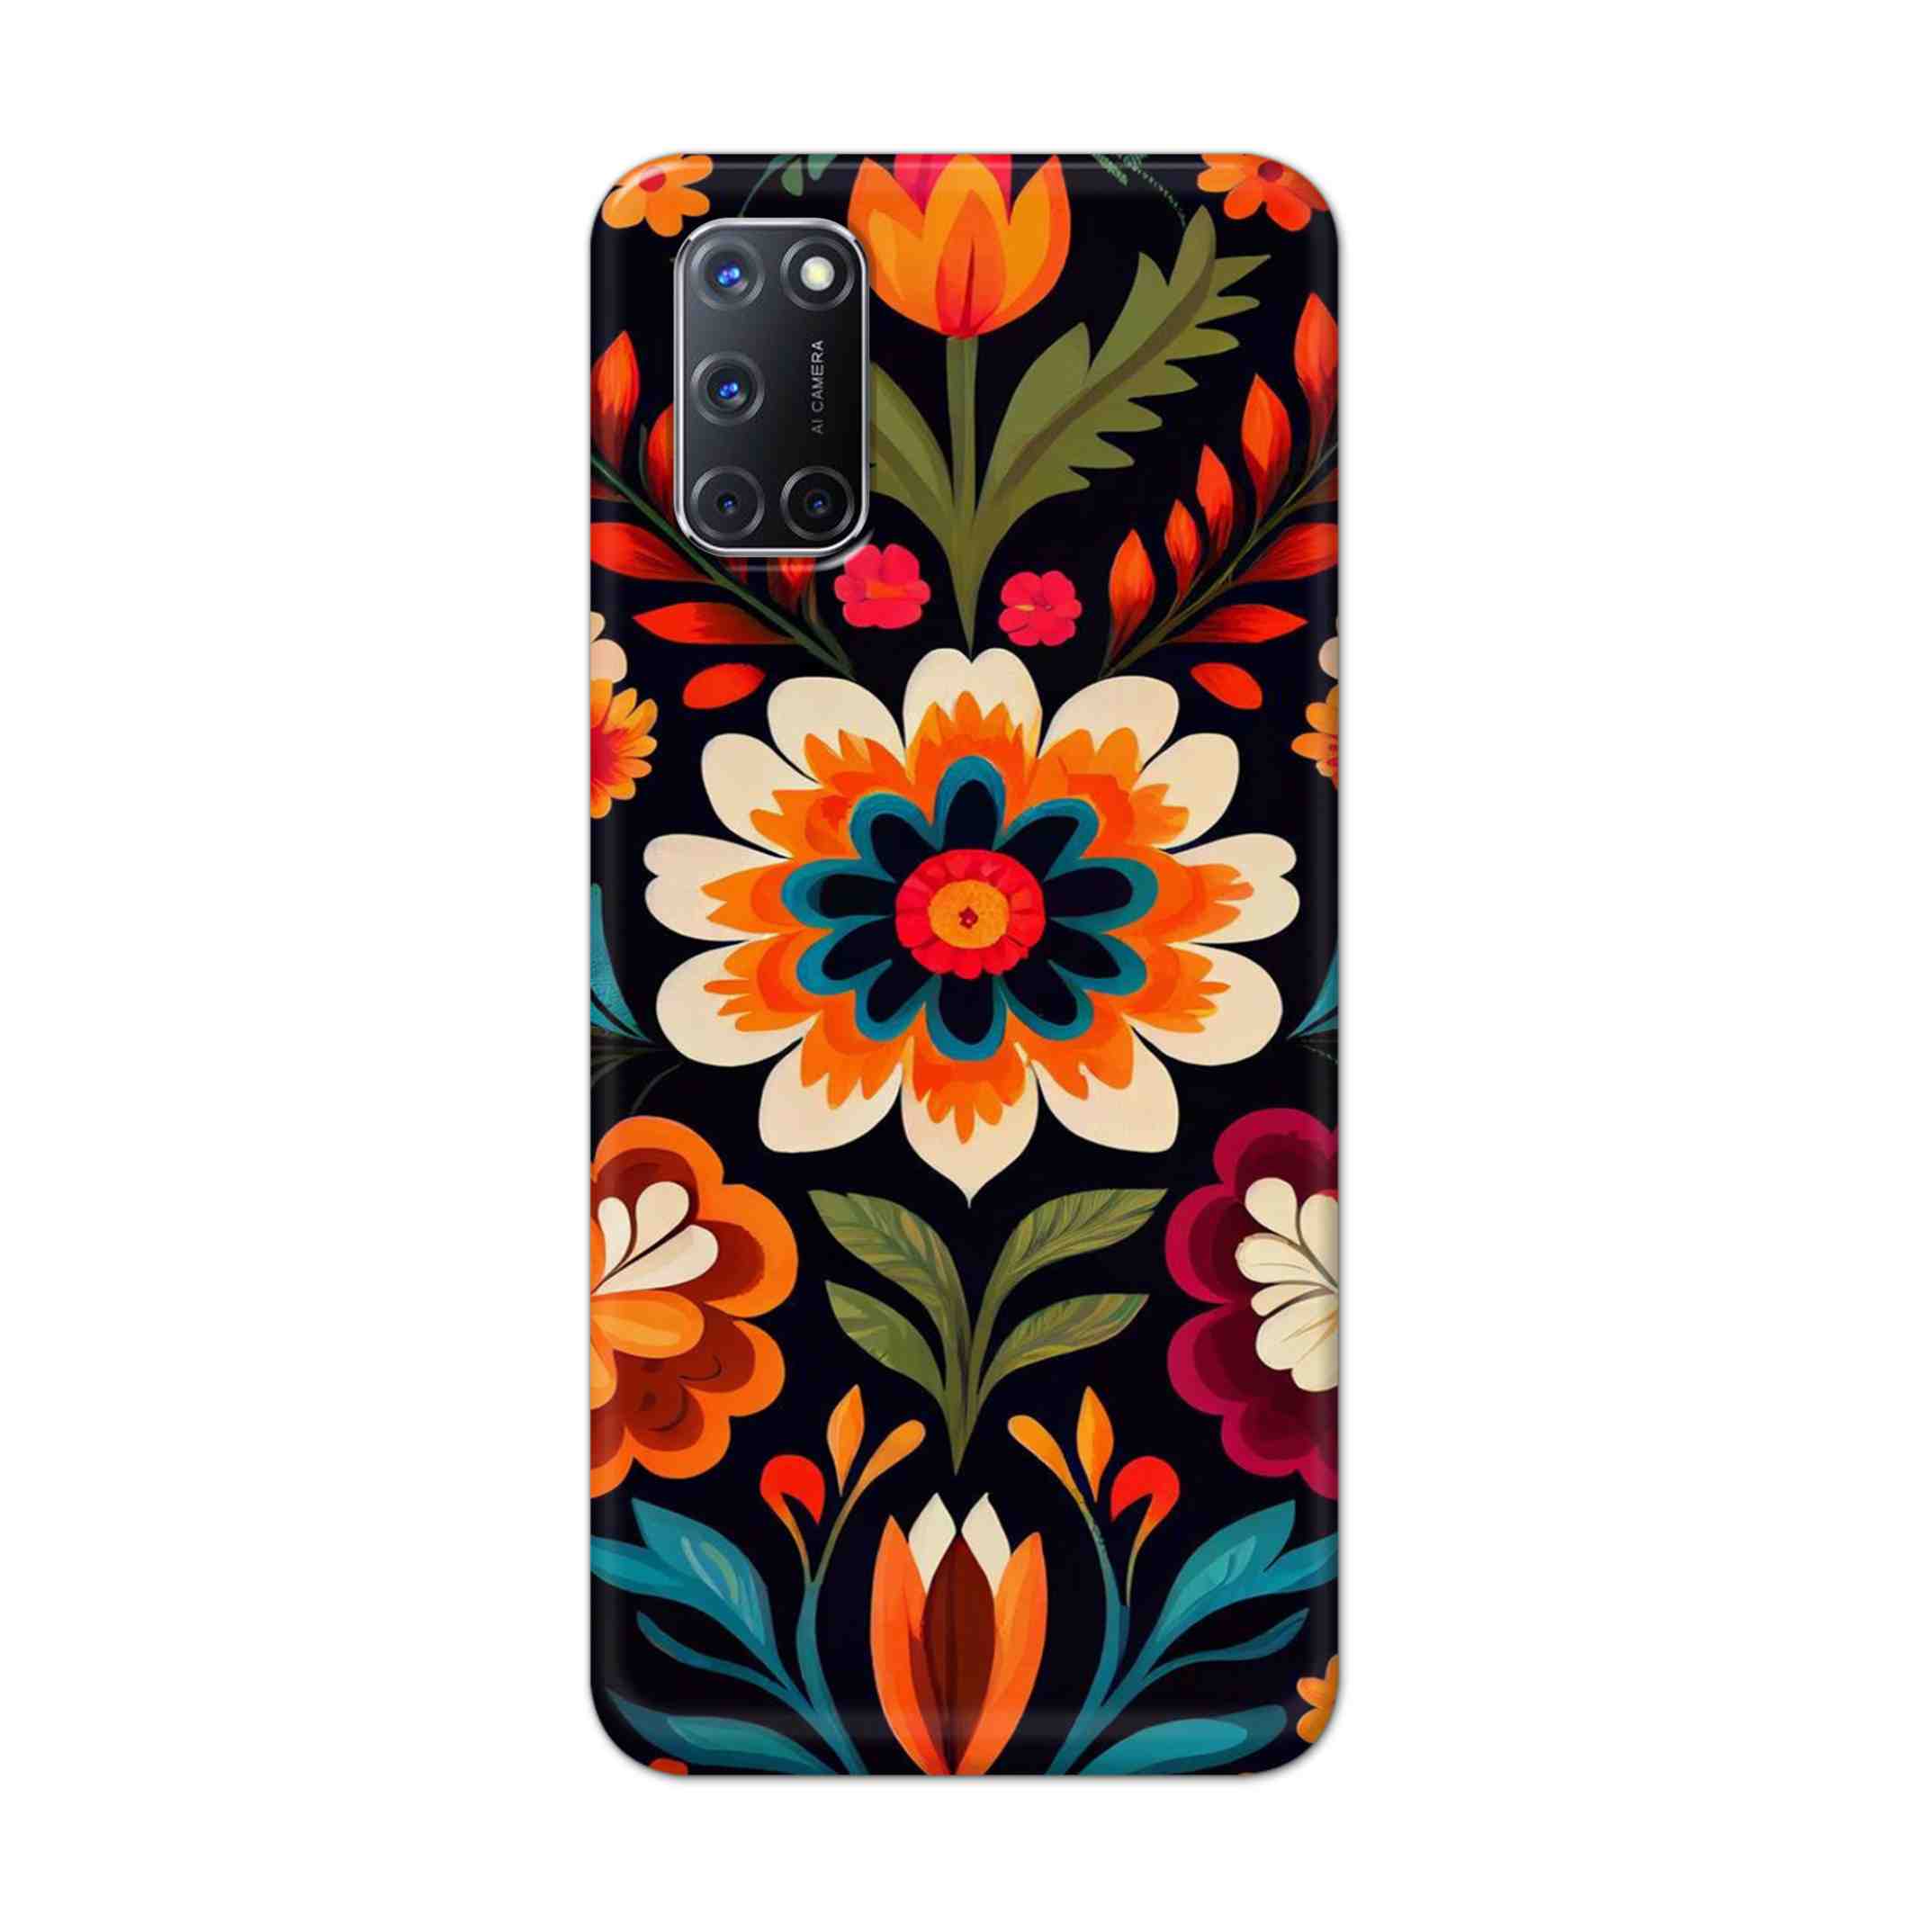 Buy Flower Hard Back Mobile Phone Case Cover For Oppo A52 Online